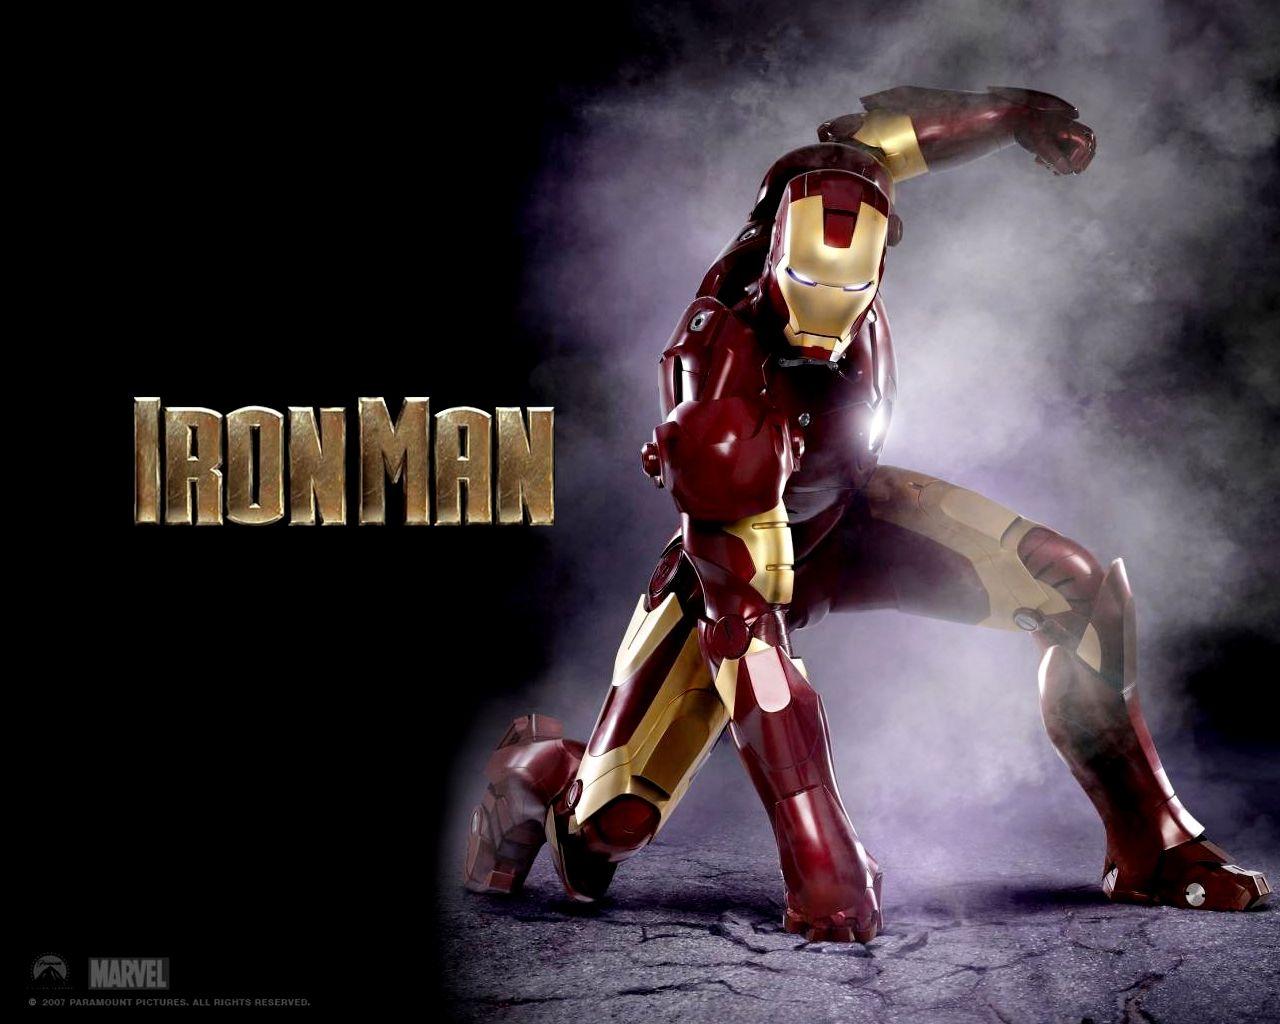 1280x1024 Iron man 2 hình nền - Iron man 2 the movie Wallpaper